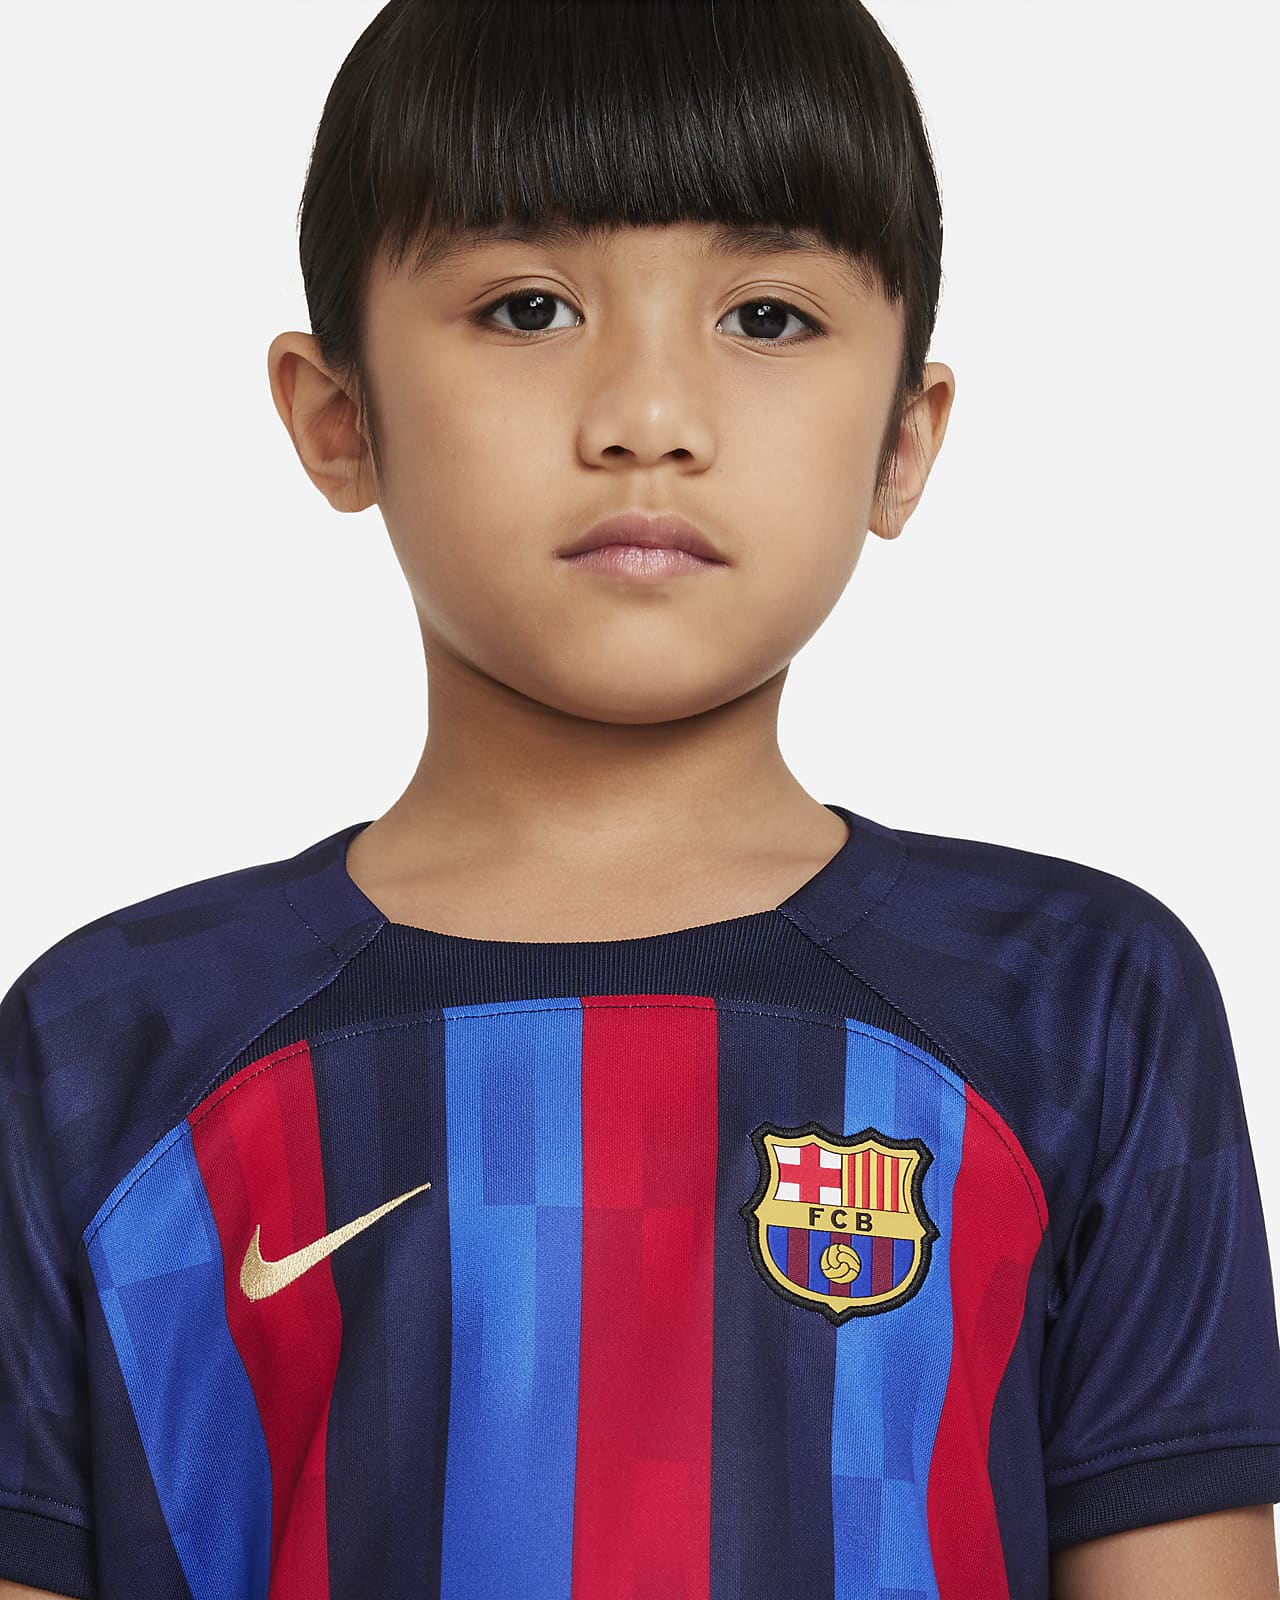 FC Home Equipación de fútbol - Niño/a pequeño/a. ES